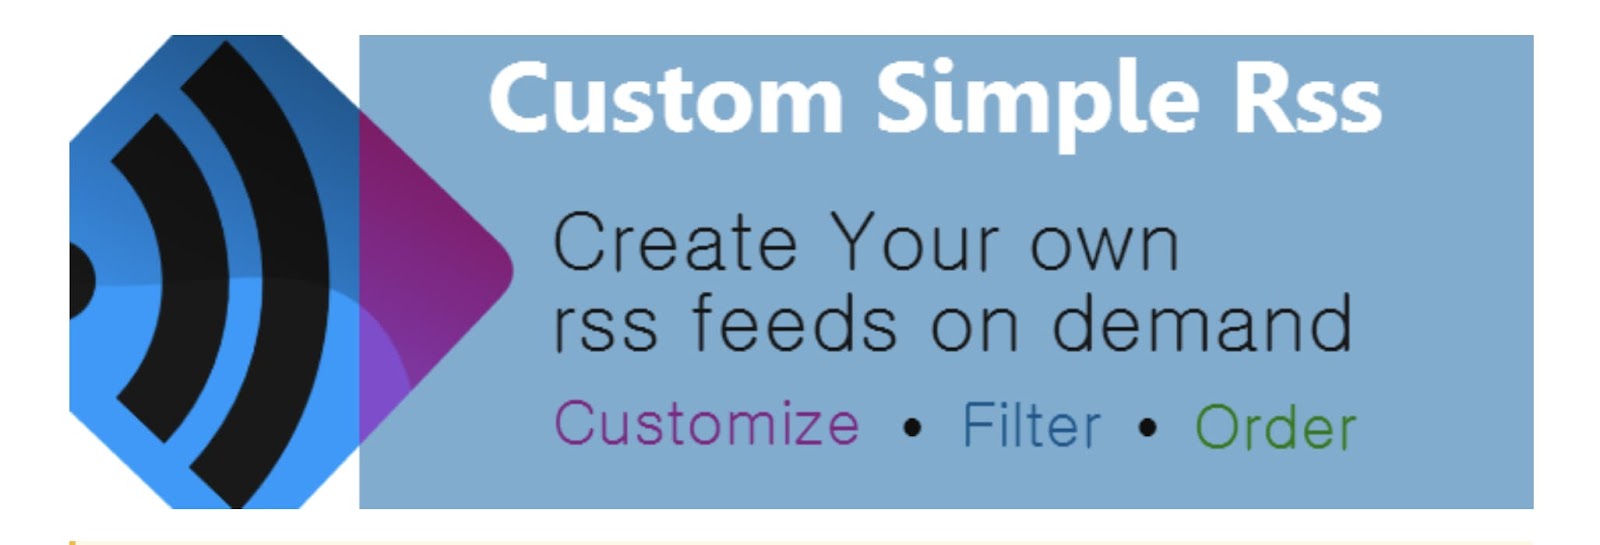 Custom Simple RSS